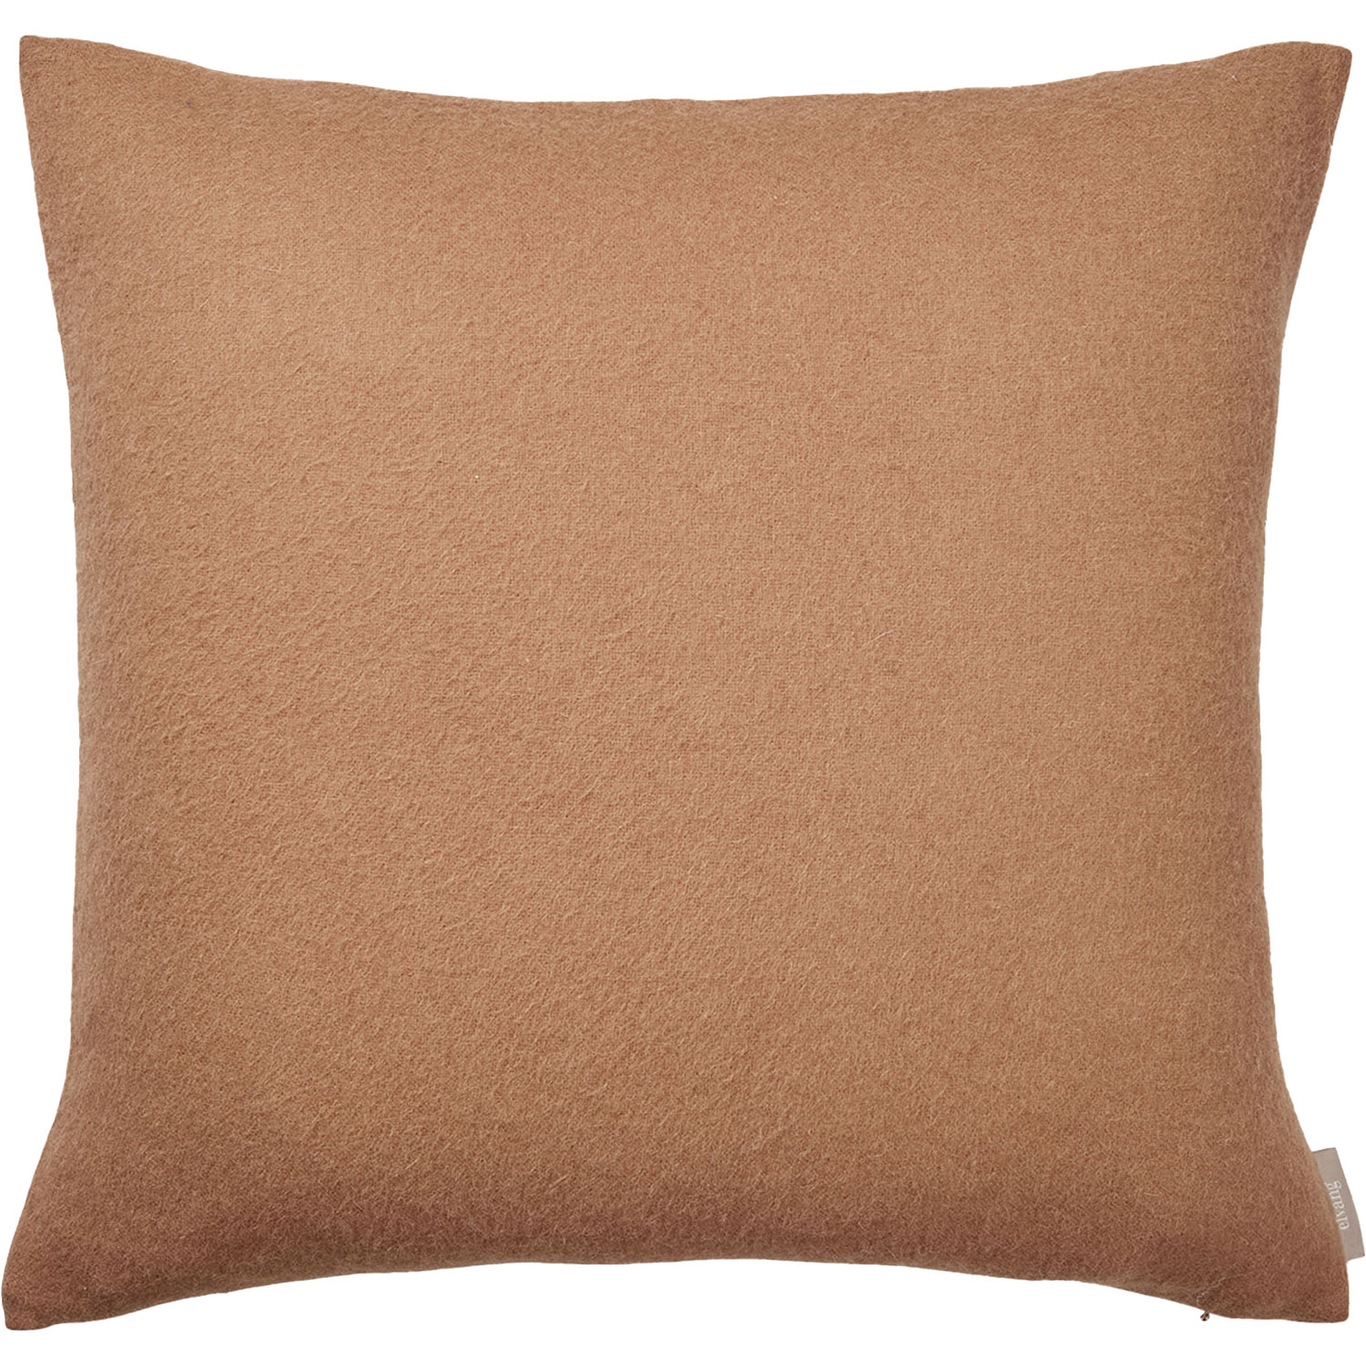 Classic Cushion Cover 50x50 cm, Camel